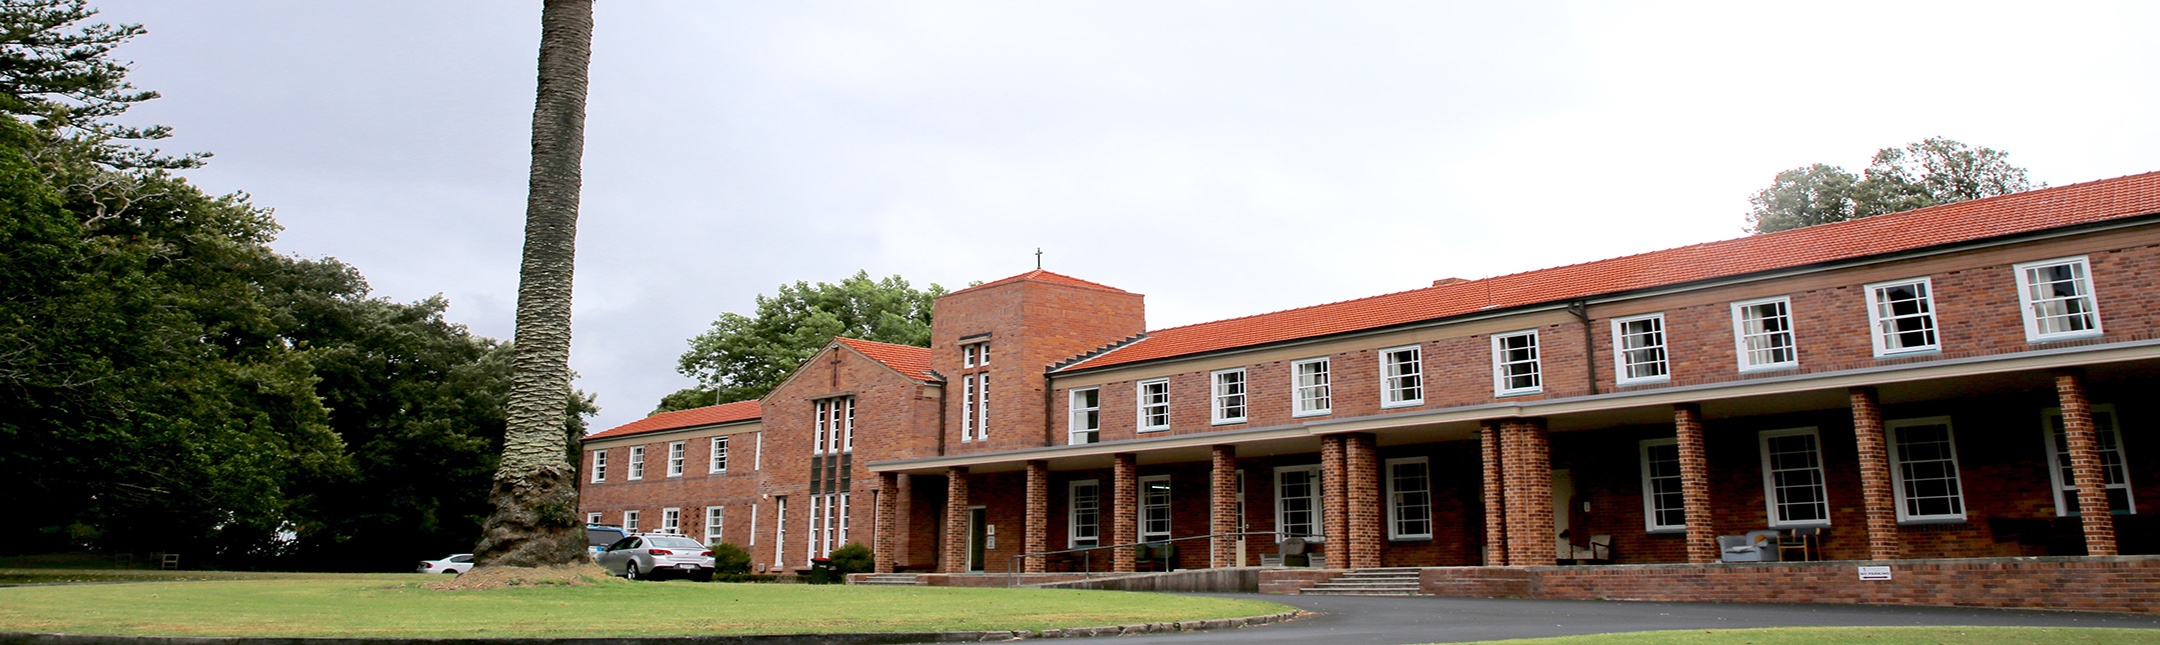 St Francis Retreat Centre, Hillsborough